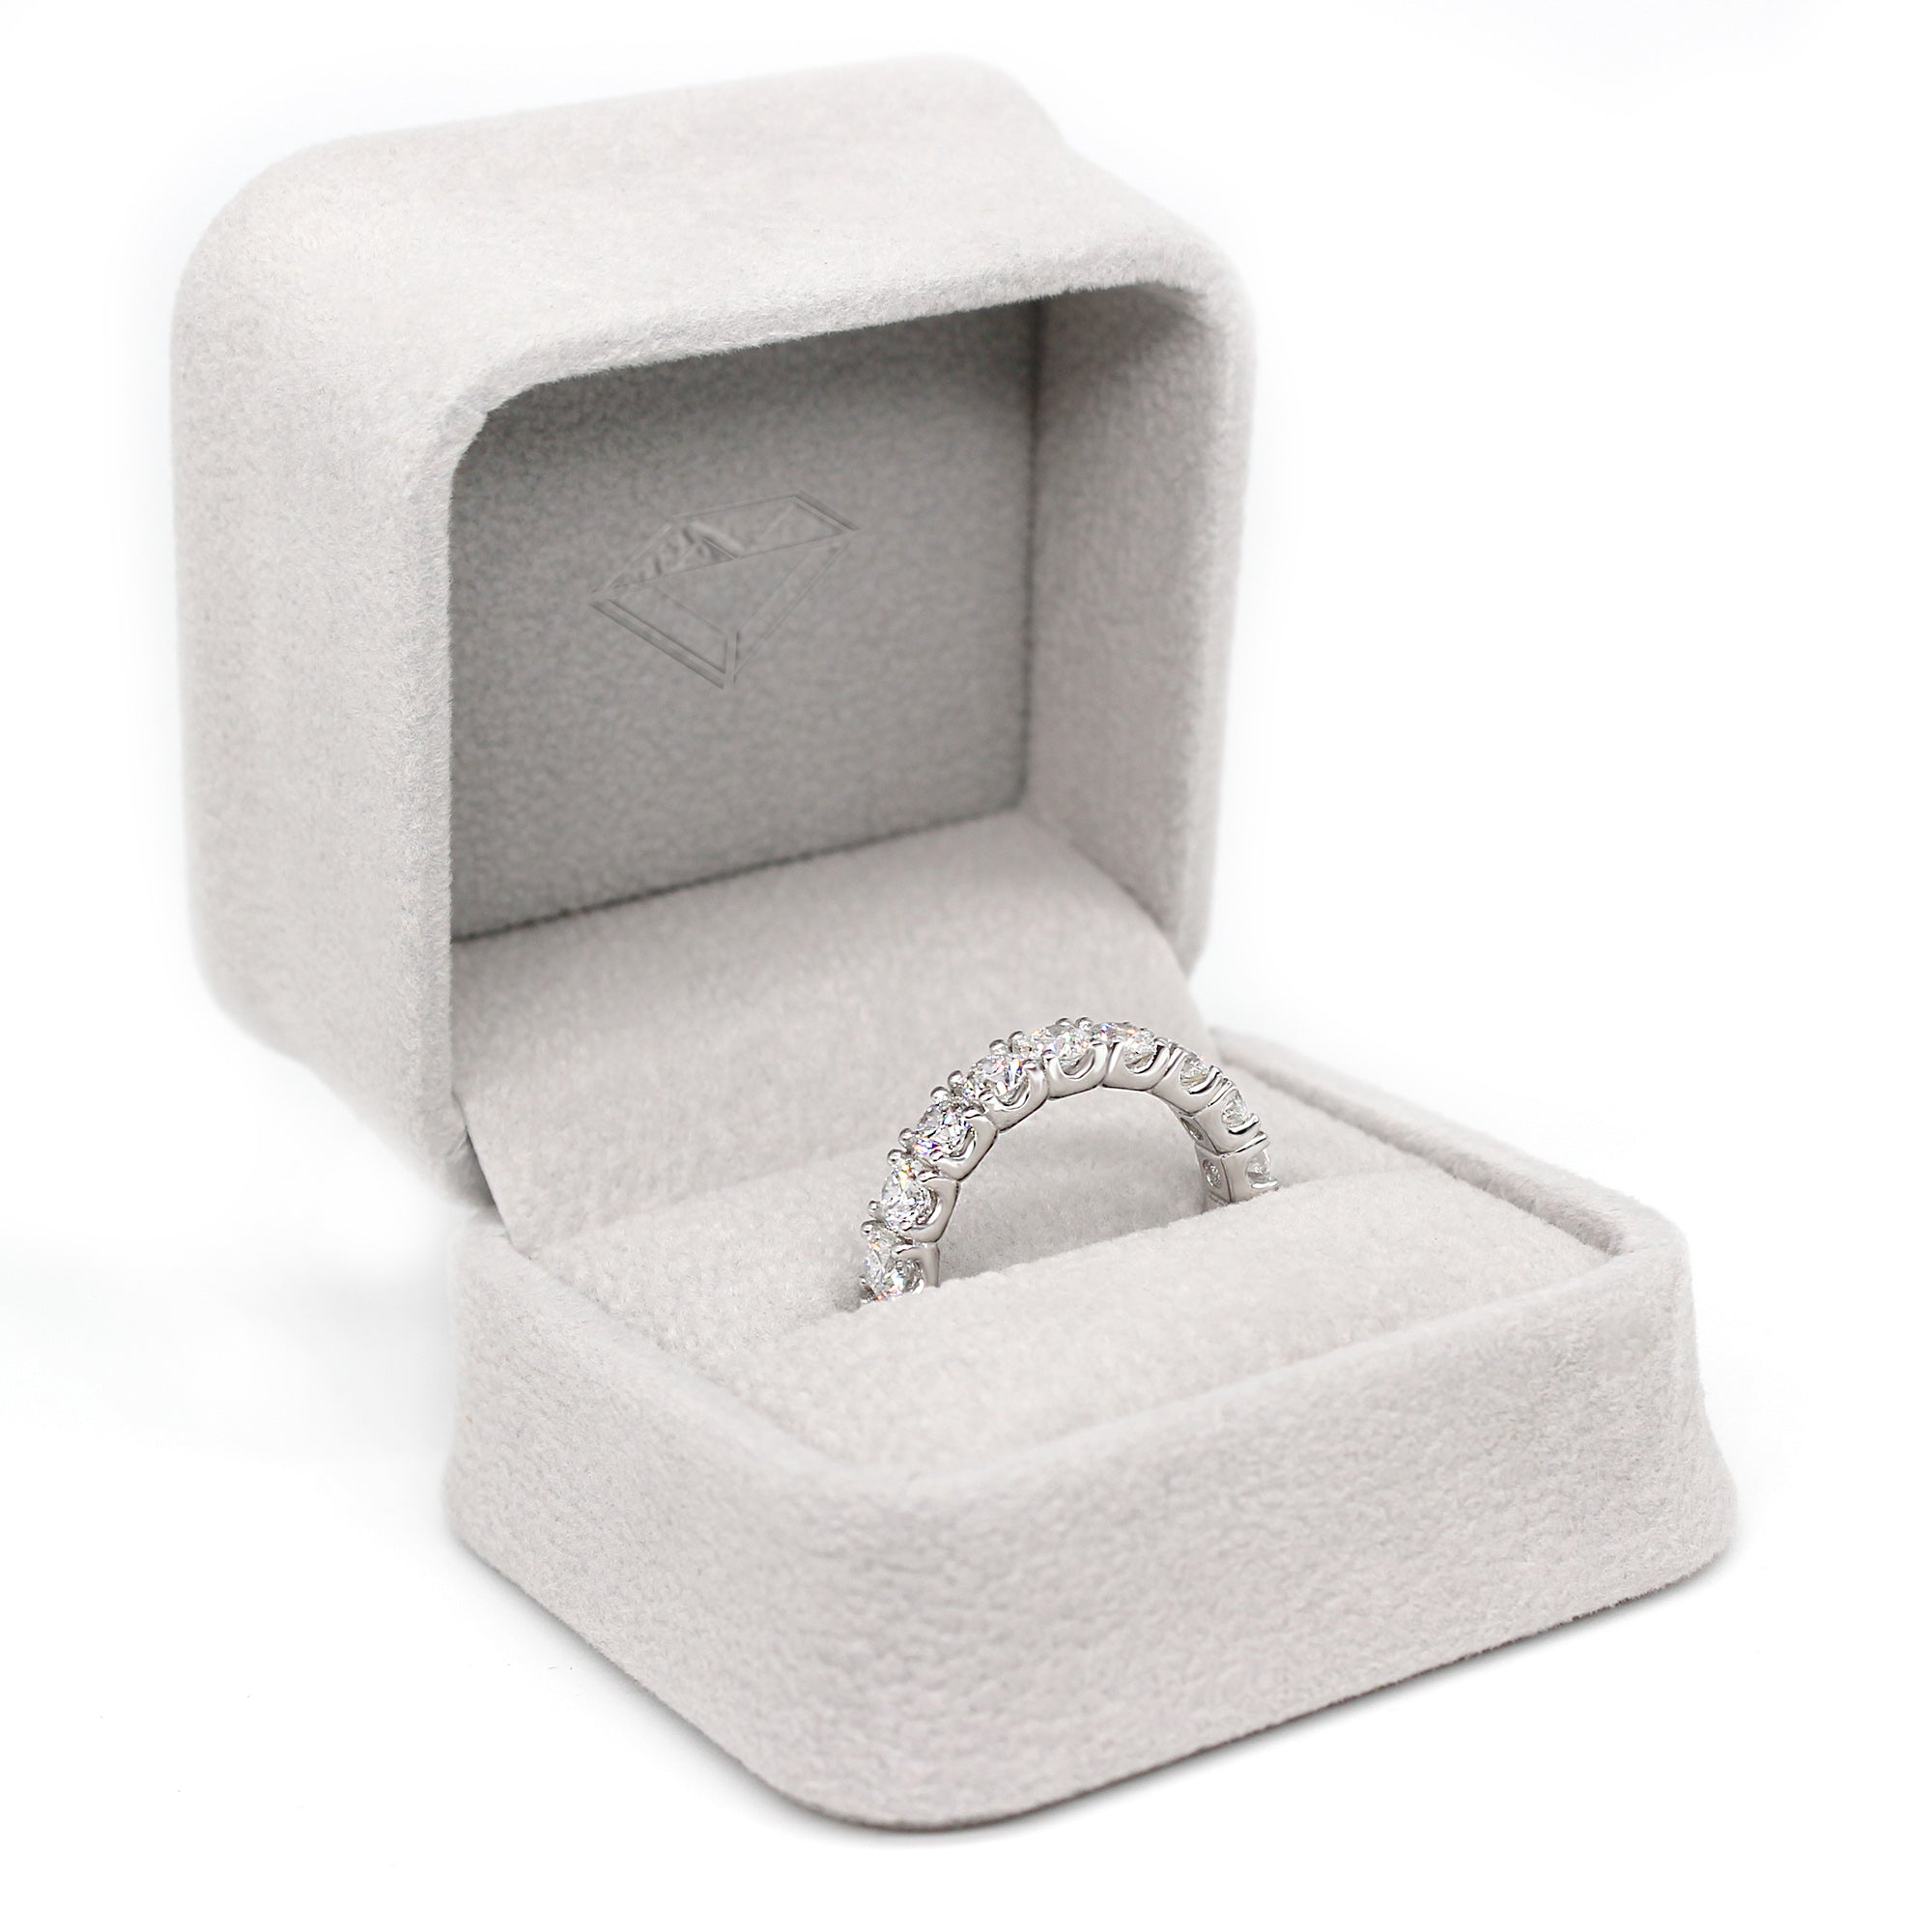 4.00 ctw Diamond Eternity Ring U Prong Style-in 14K/18K White, Yellow, Rose Gold and Platinum - Christmas Jewelry Gift -VIRABYANI